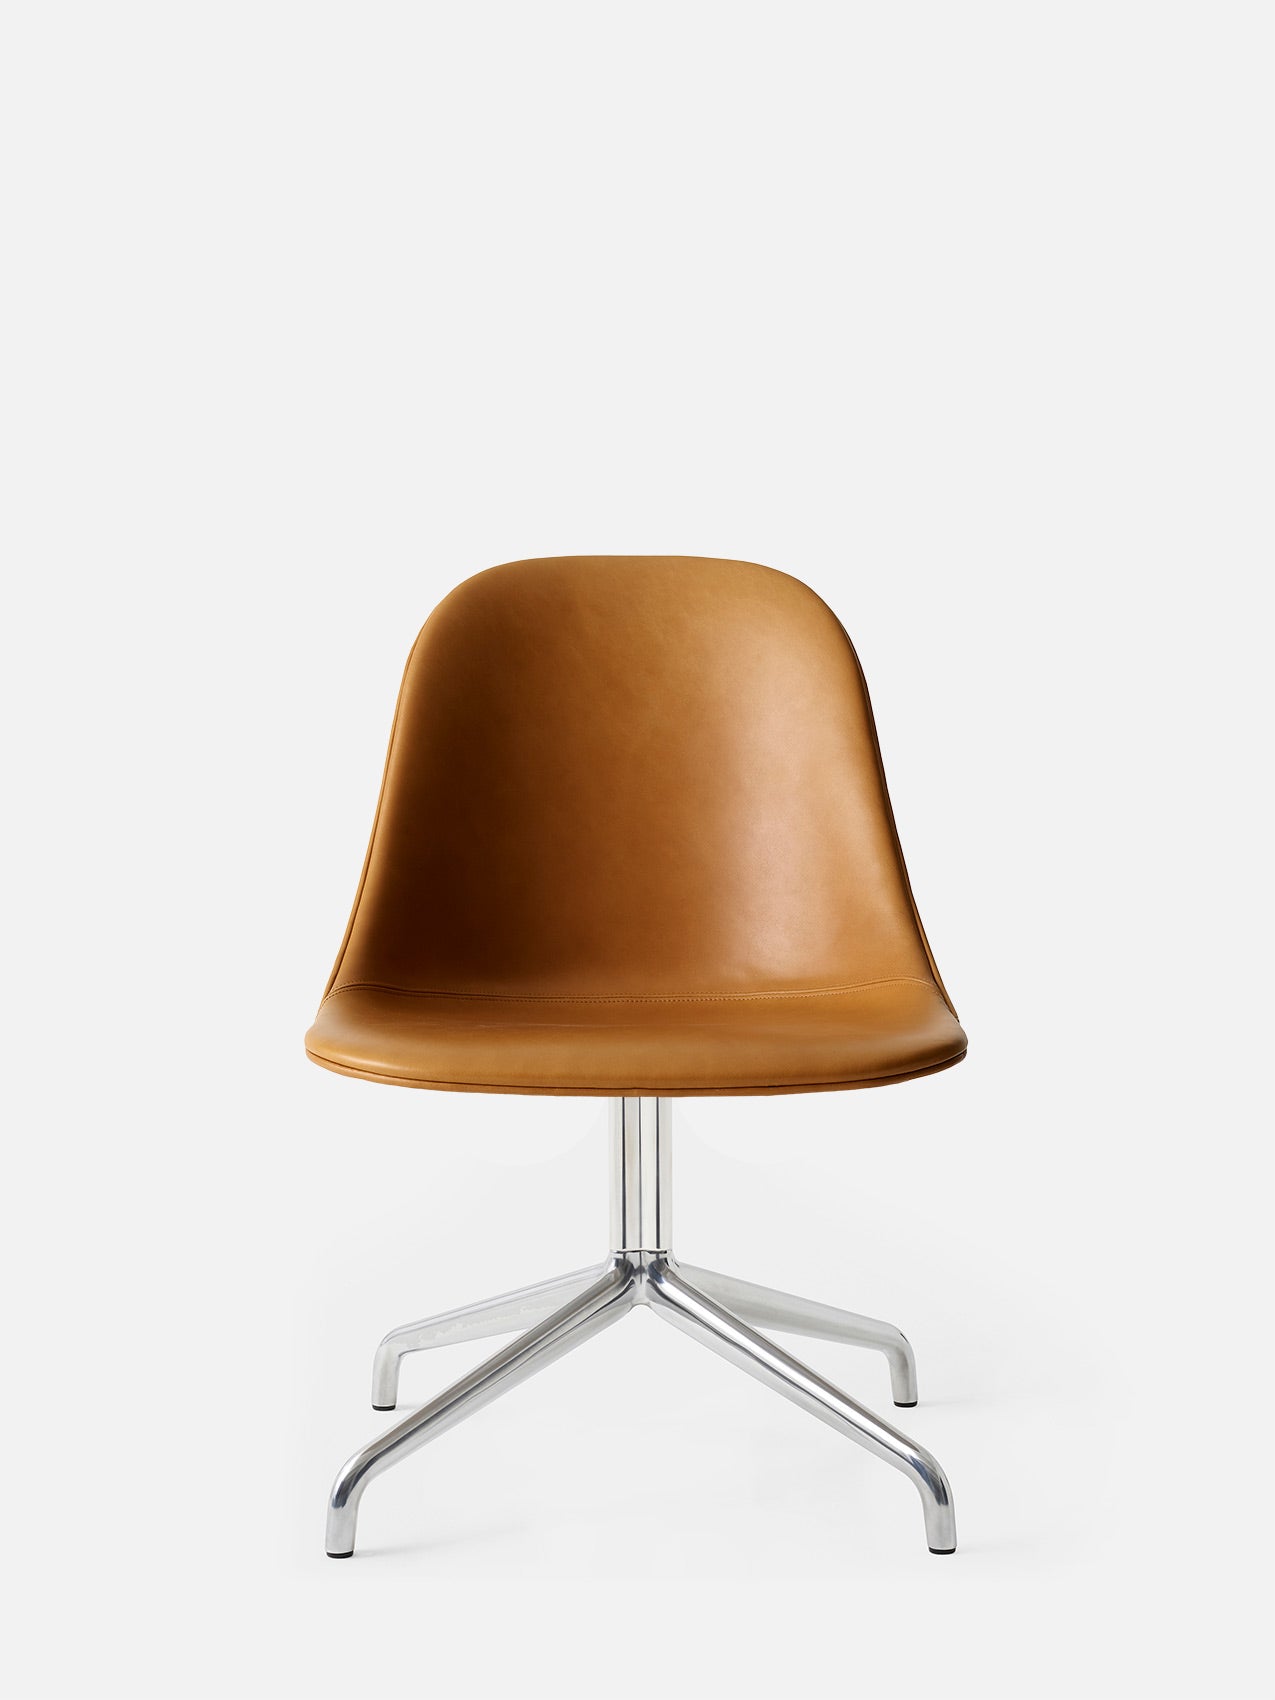 Harbour Side Chair, Upholstered-Chair-Norm Architects-Star Base (Seat 17.7in H)/Polished Aluminum-0250 Cognac/Dakar-menu-minimalist-modern-danish-design-home-decor